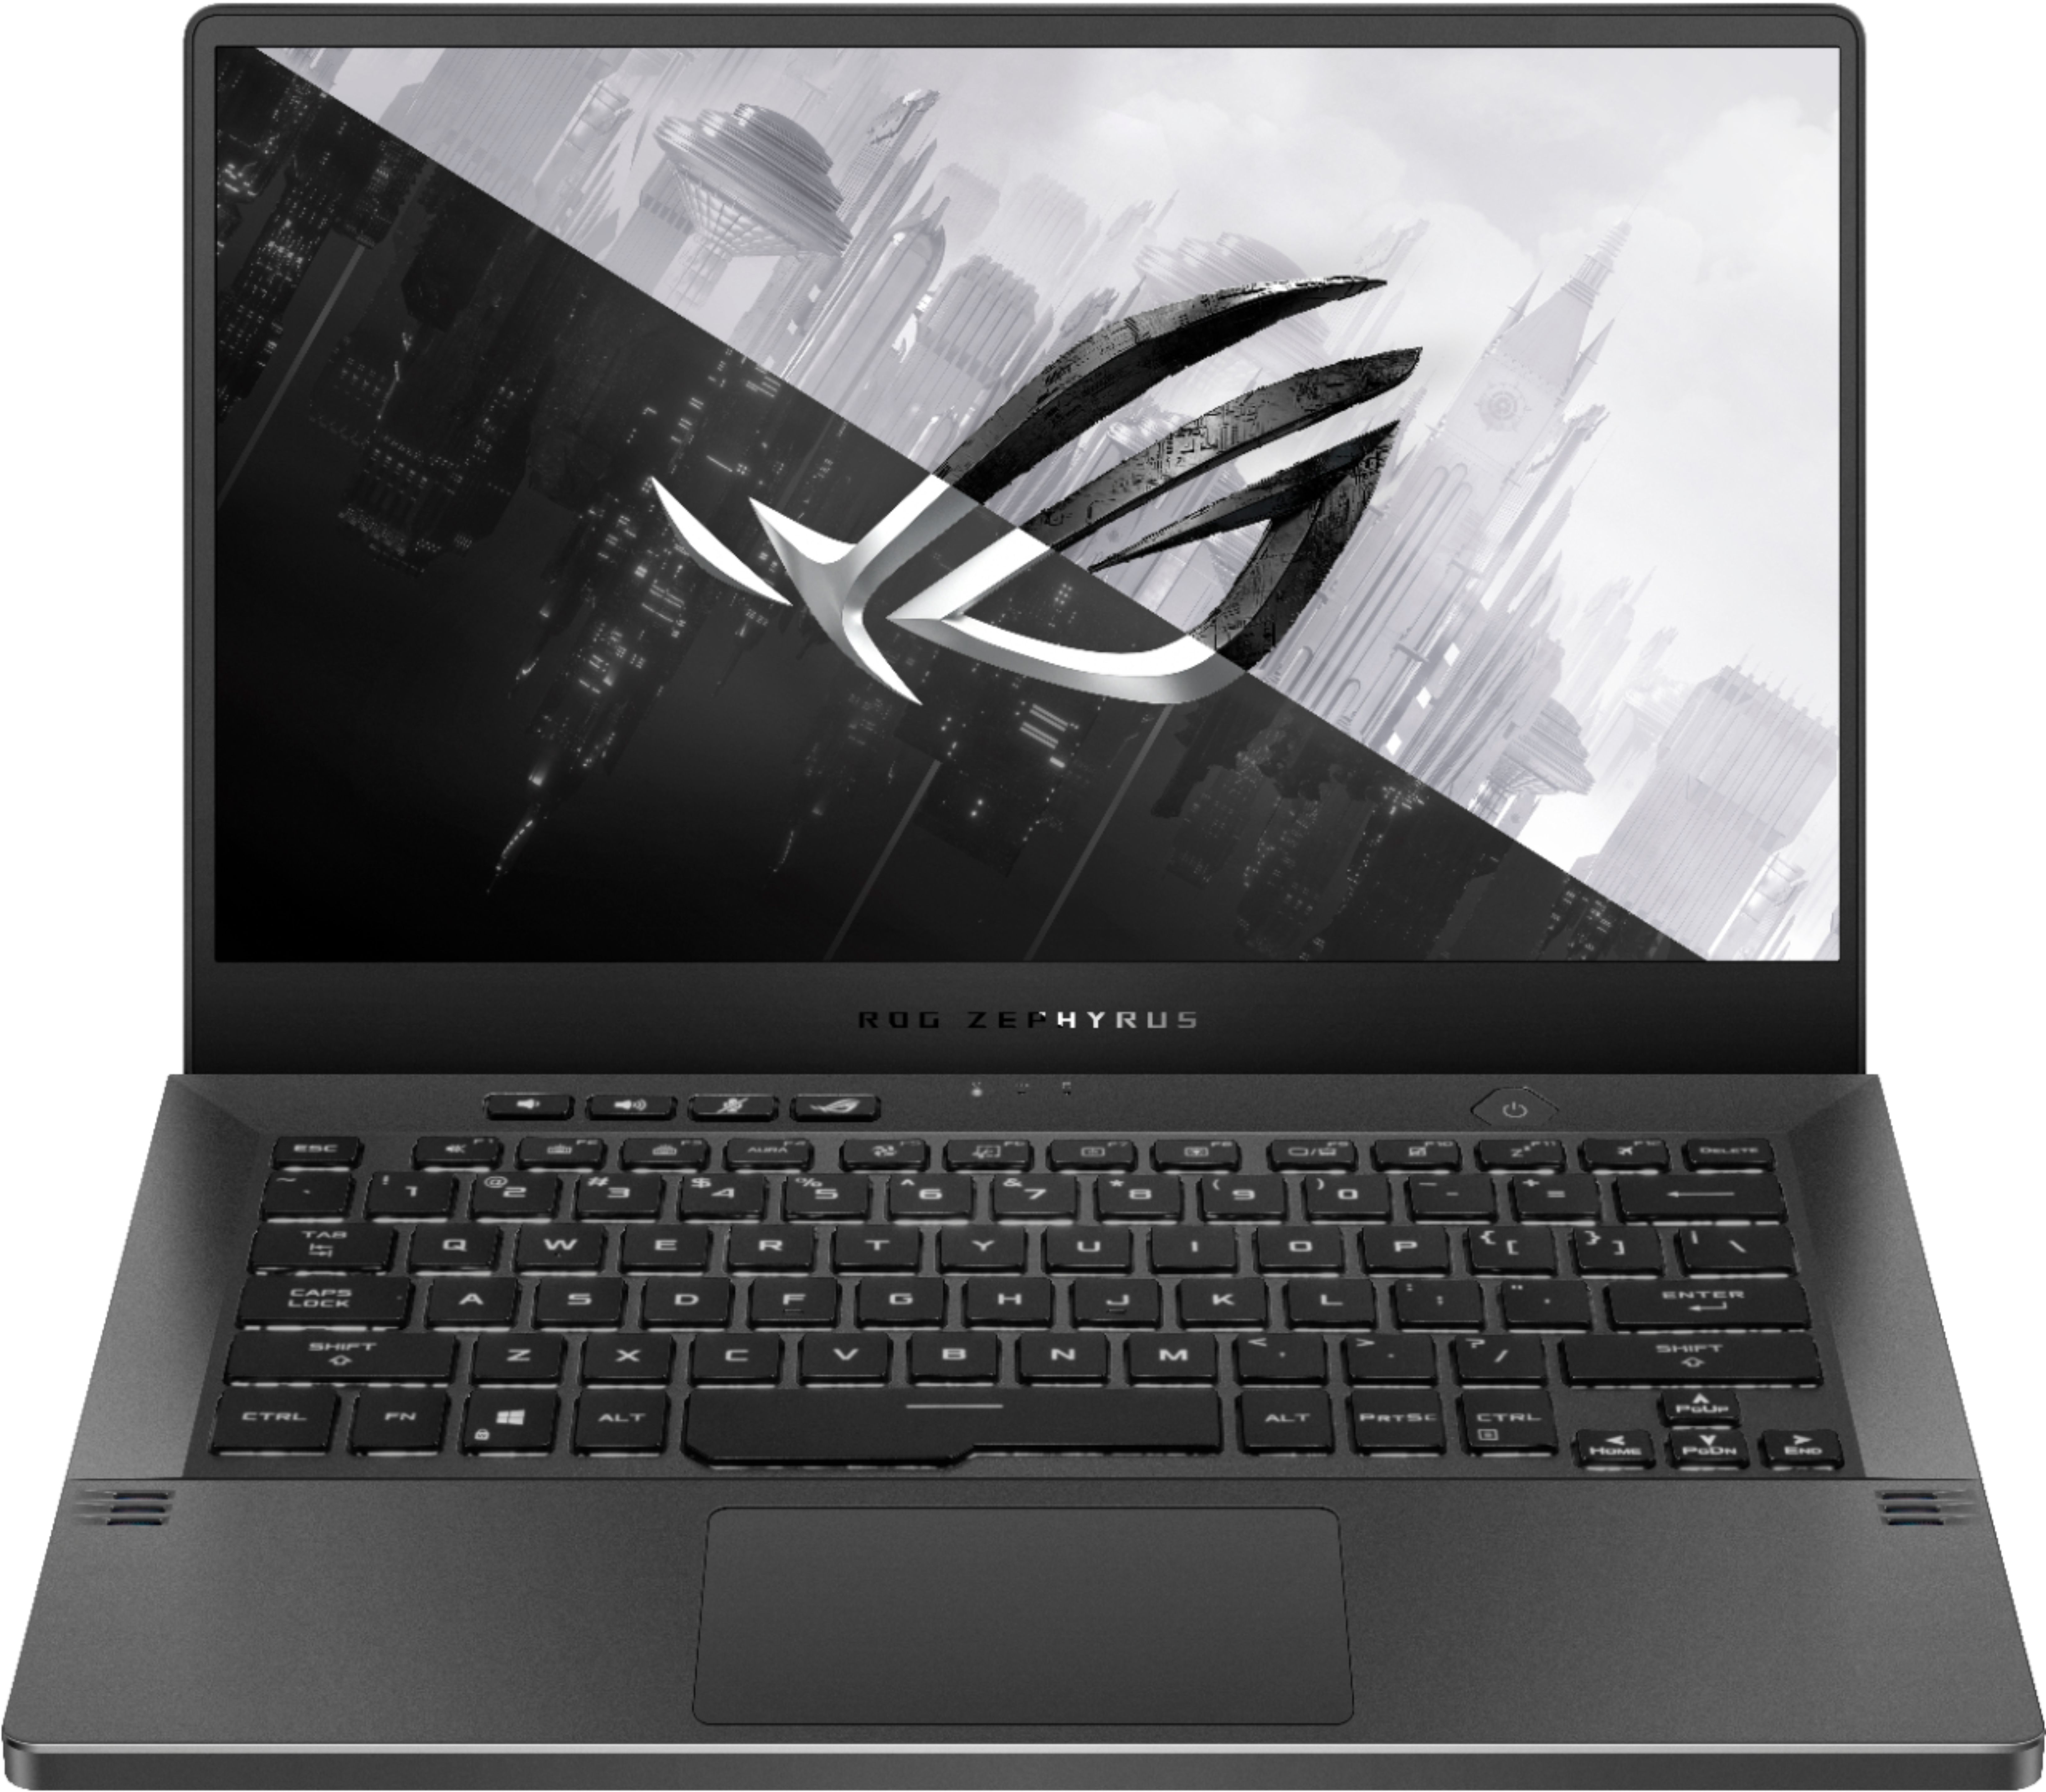 ASUS - ROG Zephyrus G14 14" Laptop - AMD Ryzen 7 - 16GB Memory - NVIDIA GeForce GTX 1650 - 512GB SSD $950